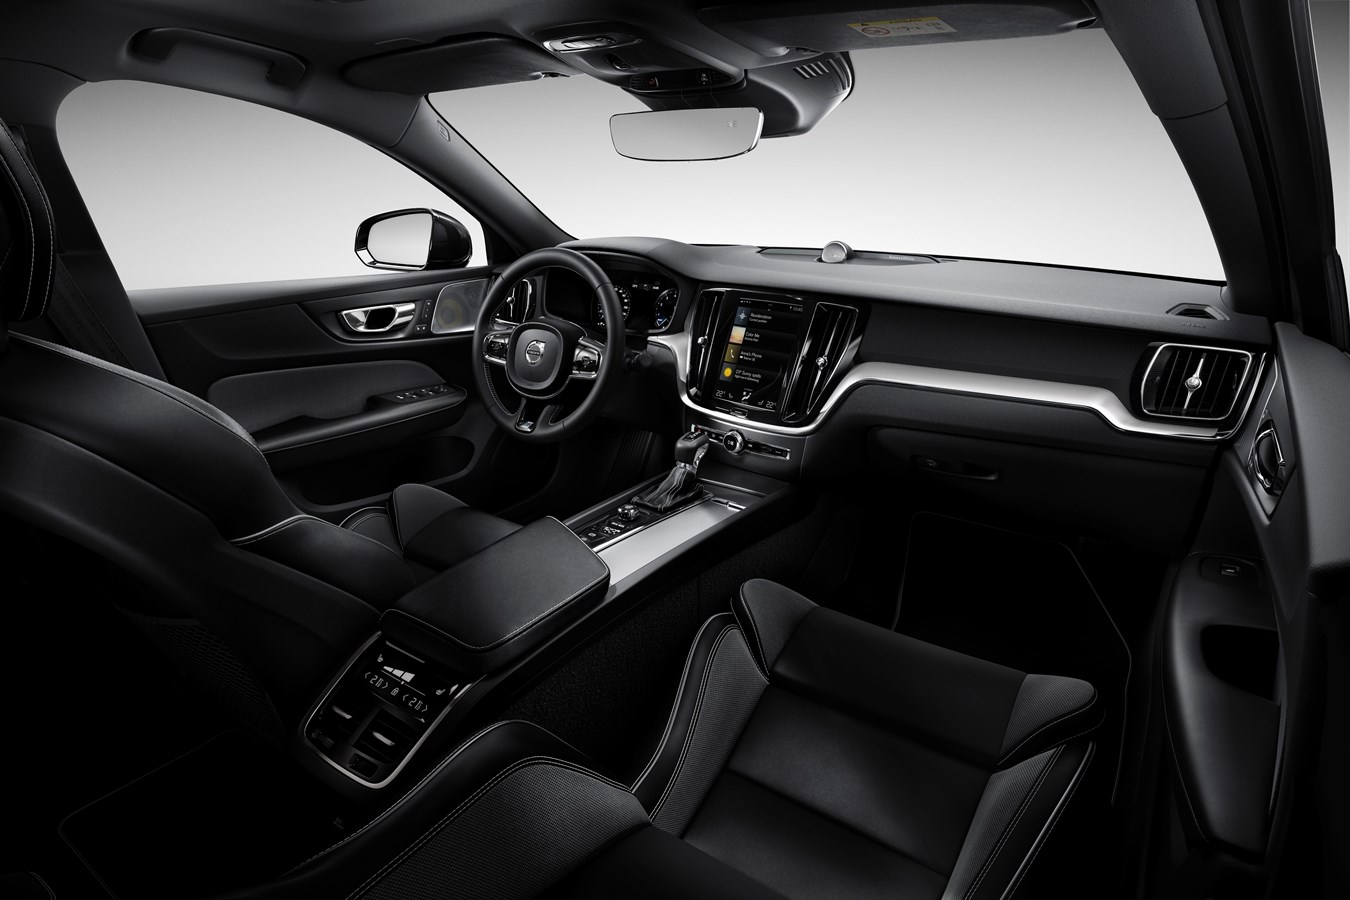 New Volvo S60 R-Design interior - Volvo Car USA Newsroom